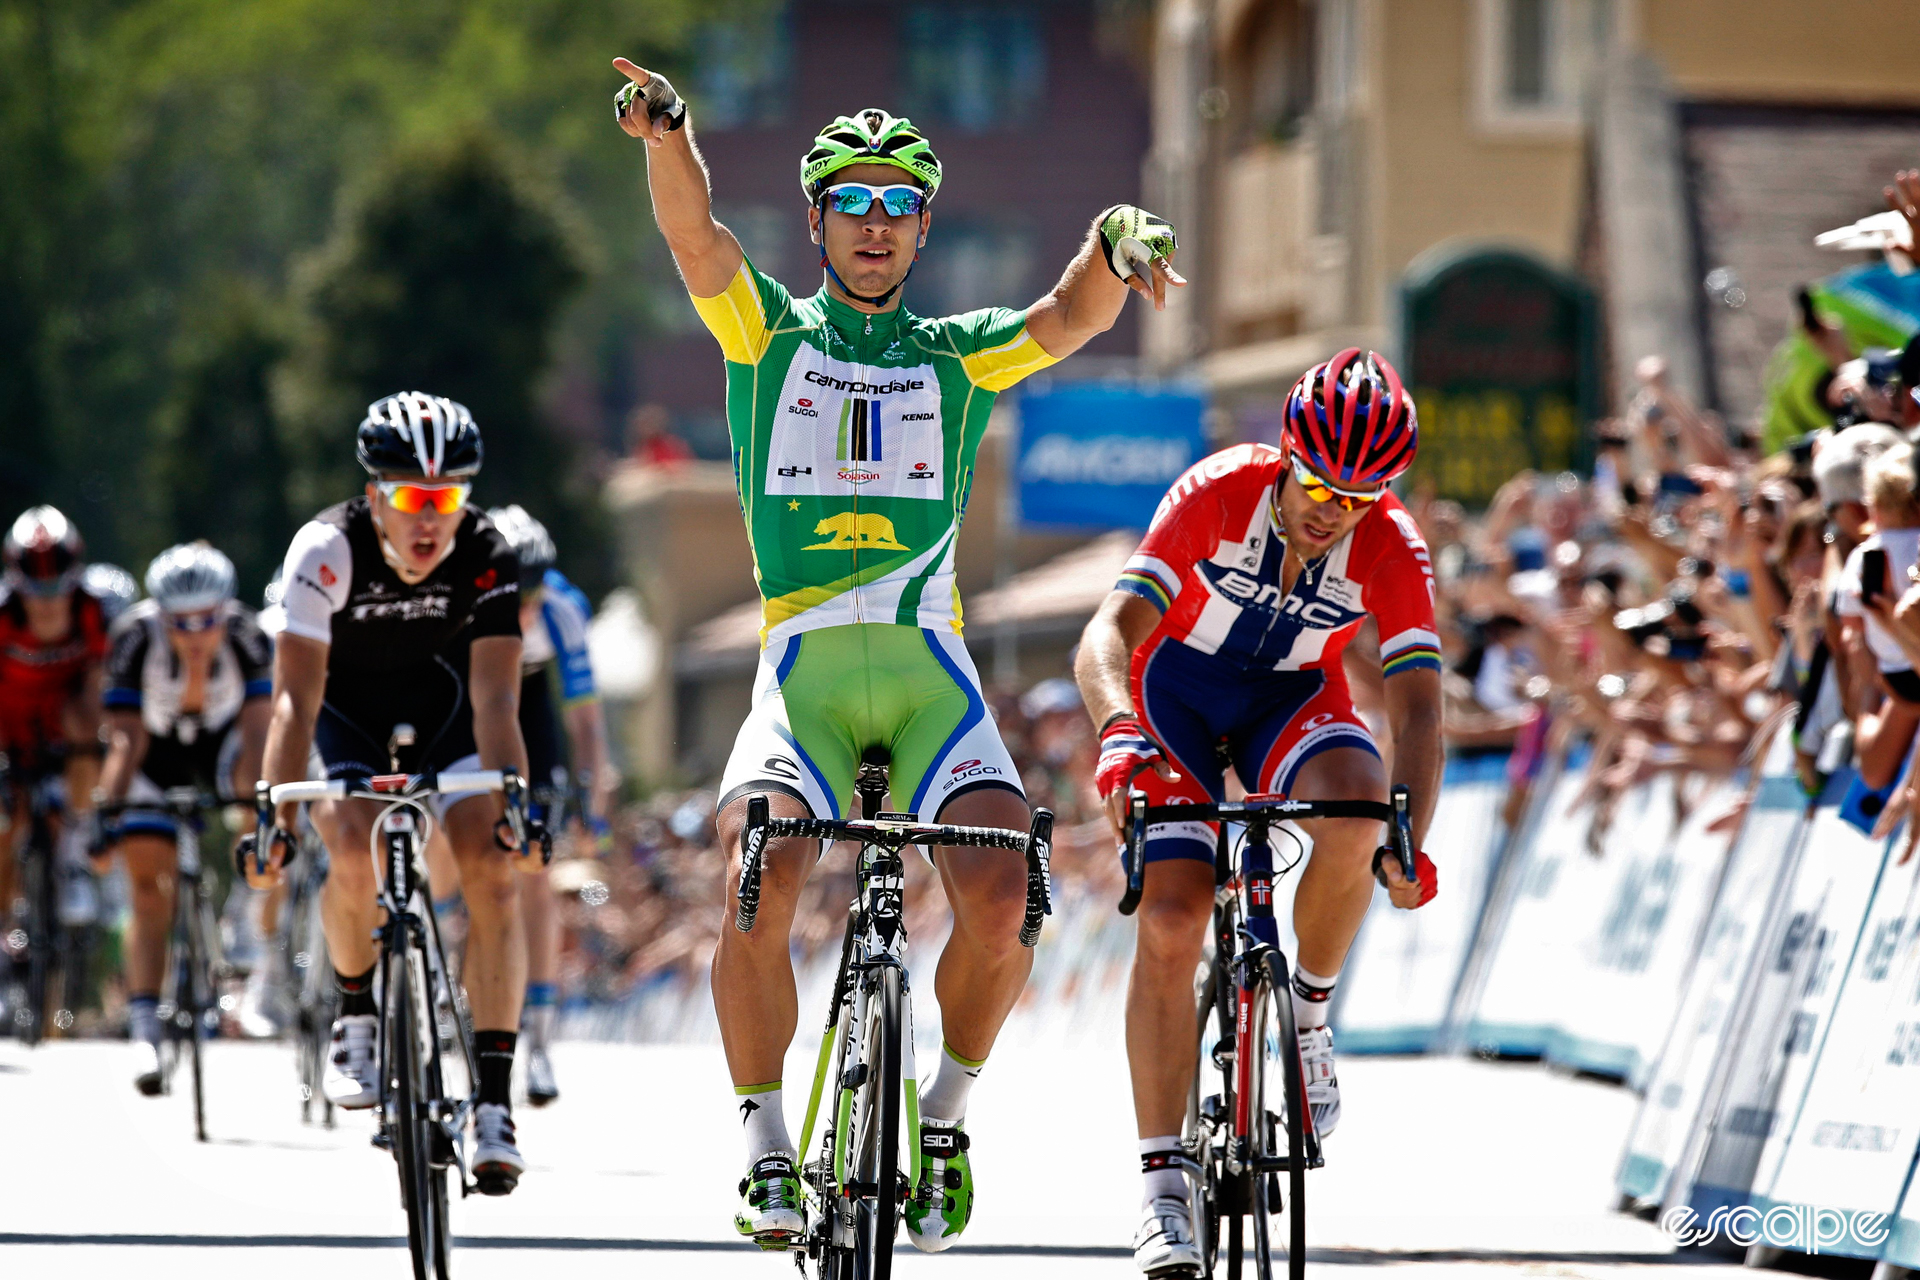 Peter Sagan celebrates winning a stage at the 2014 Tour of California.